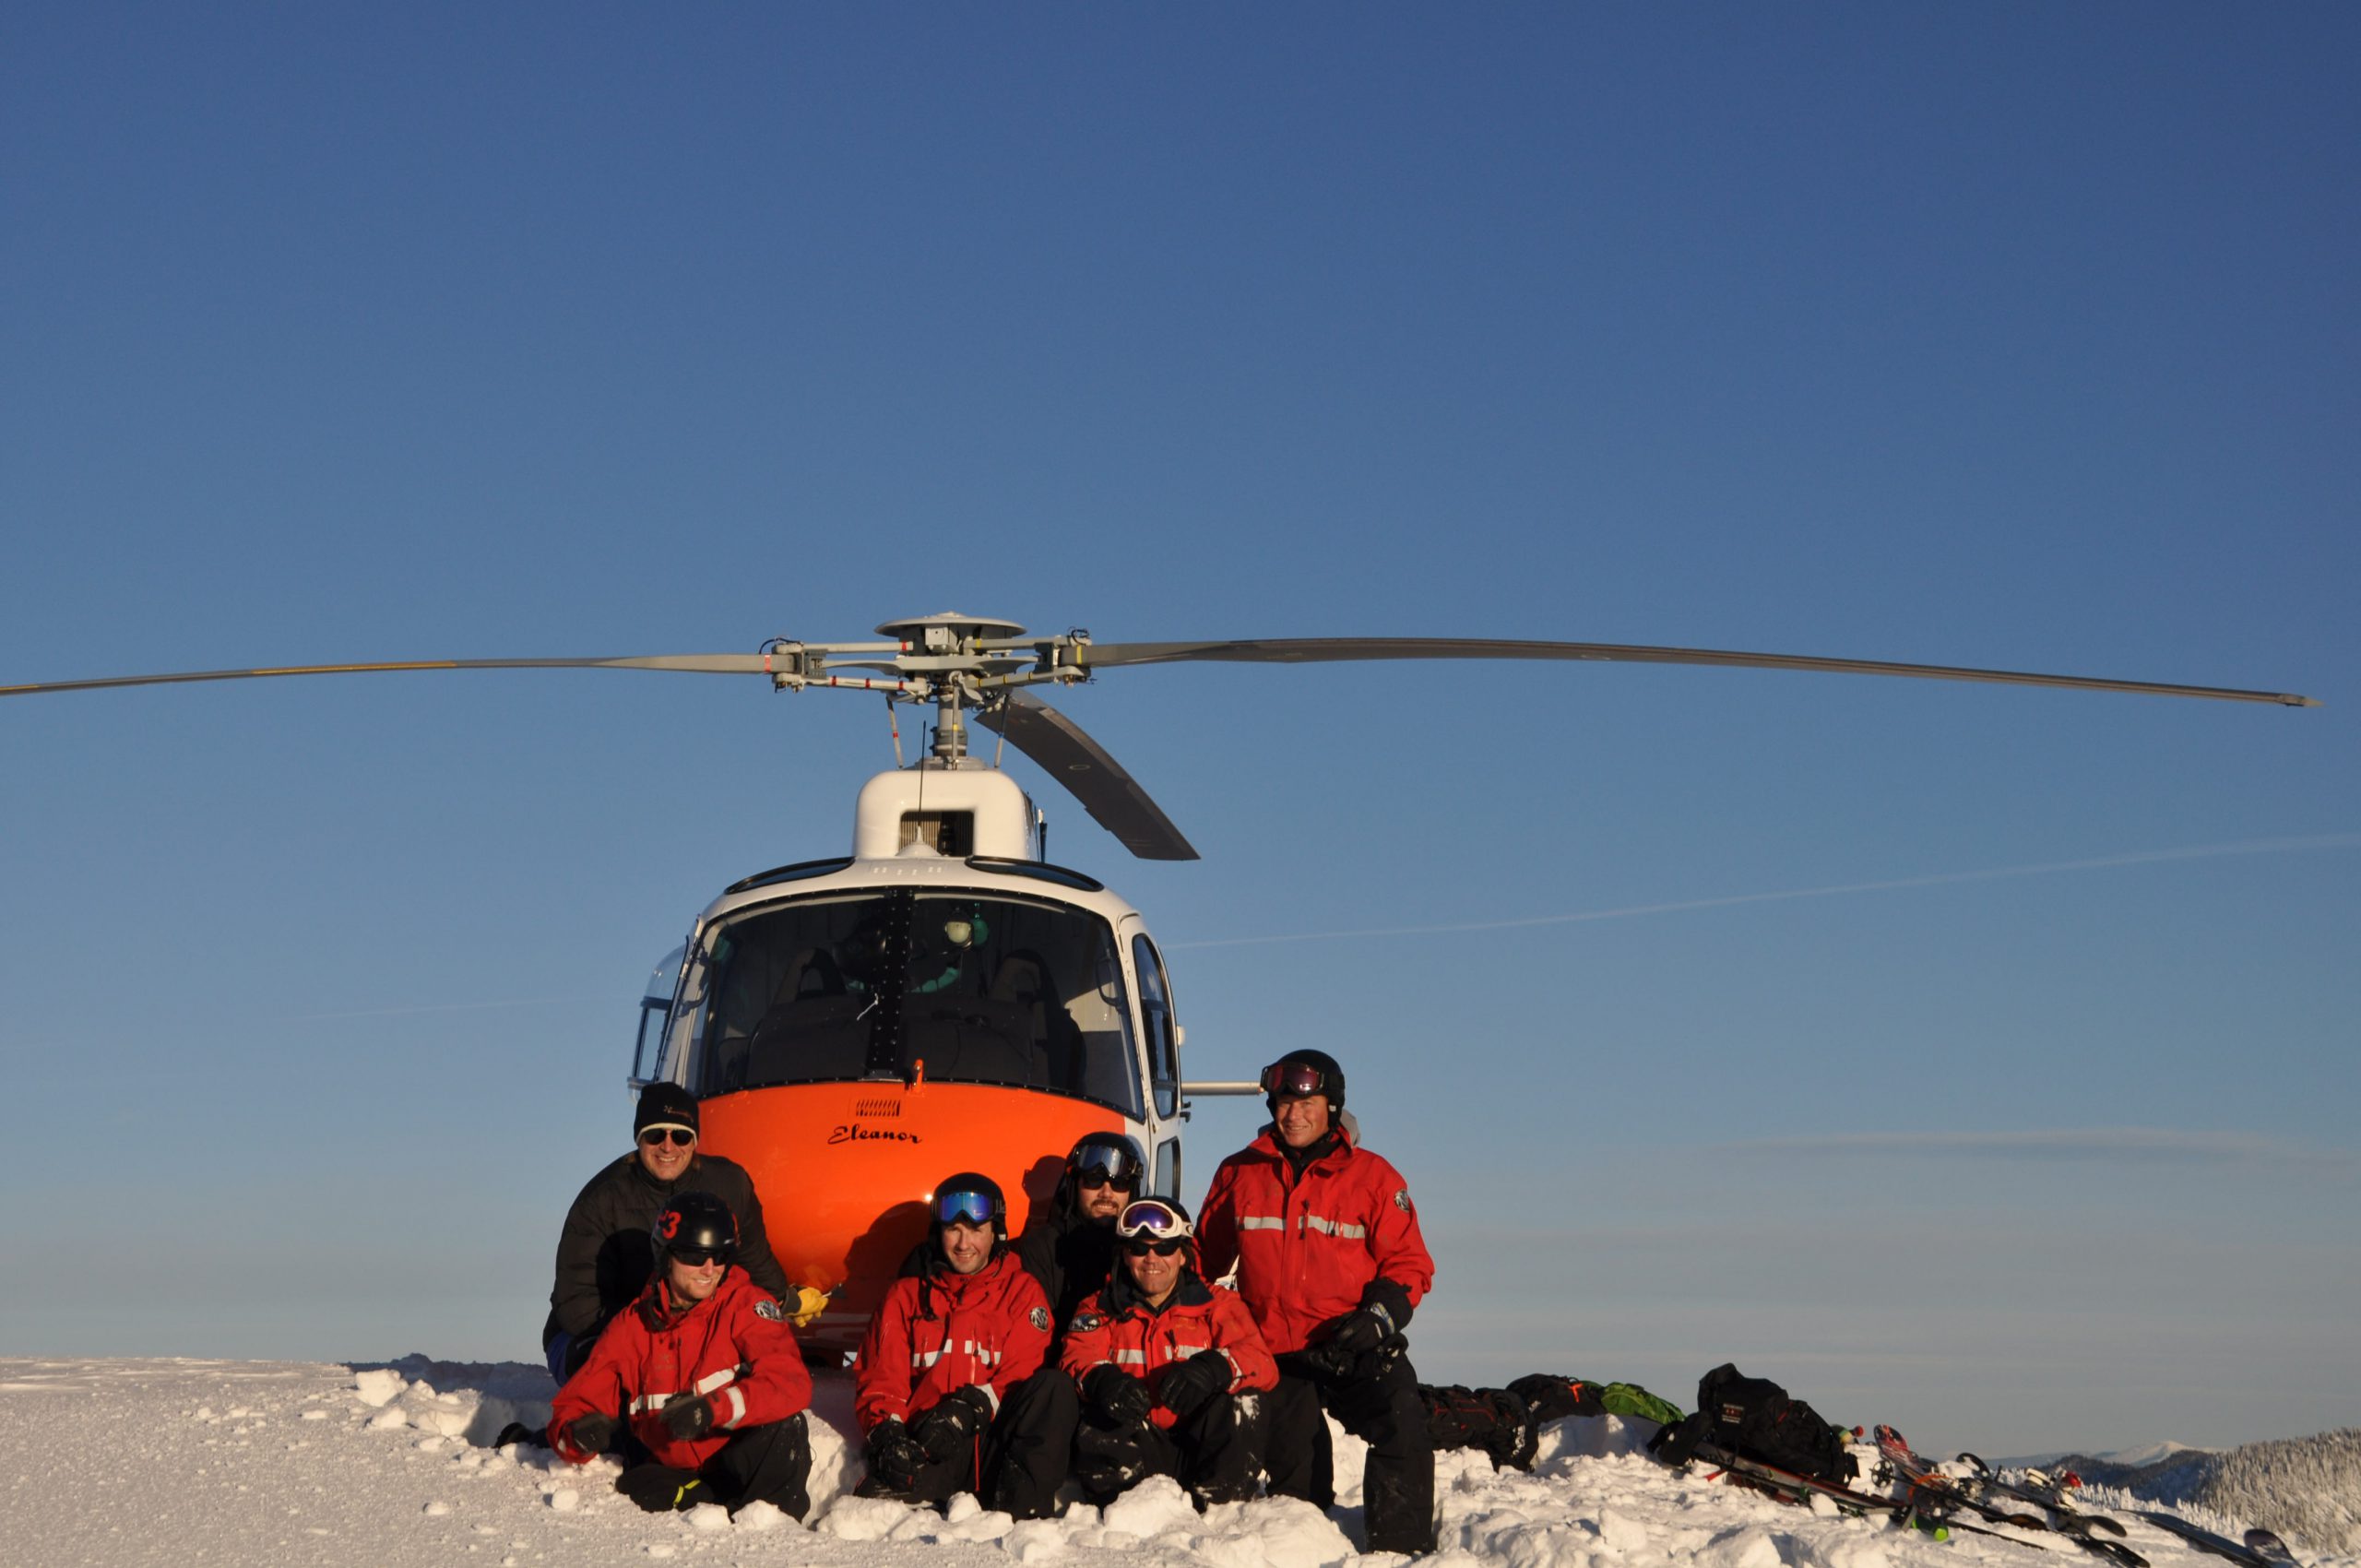 Avalanche team photo taken at Kootenay Pass